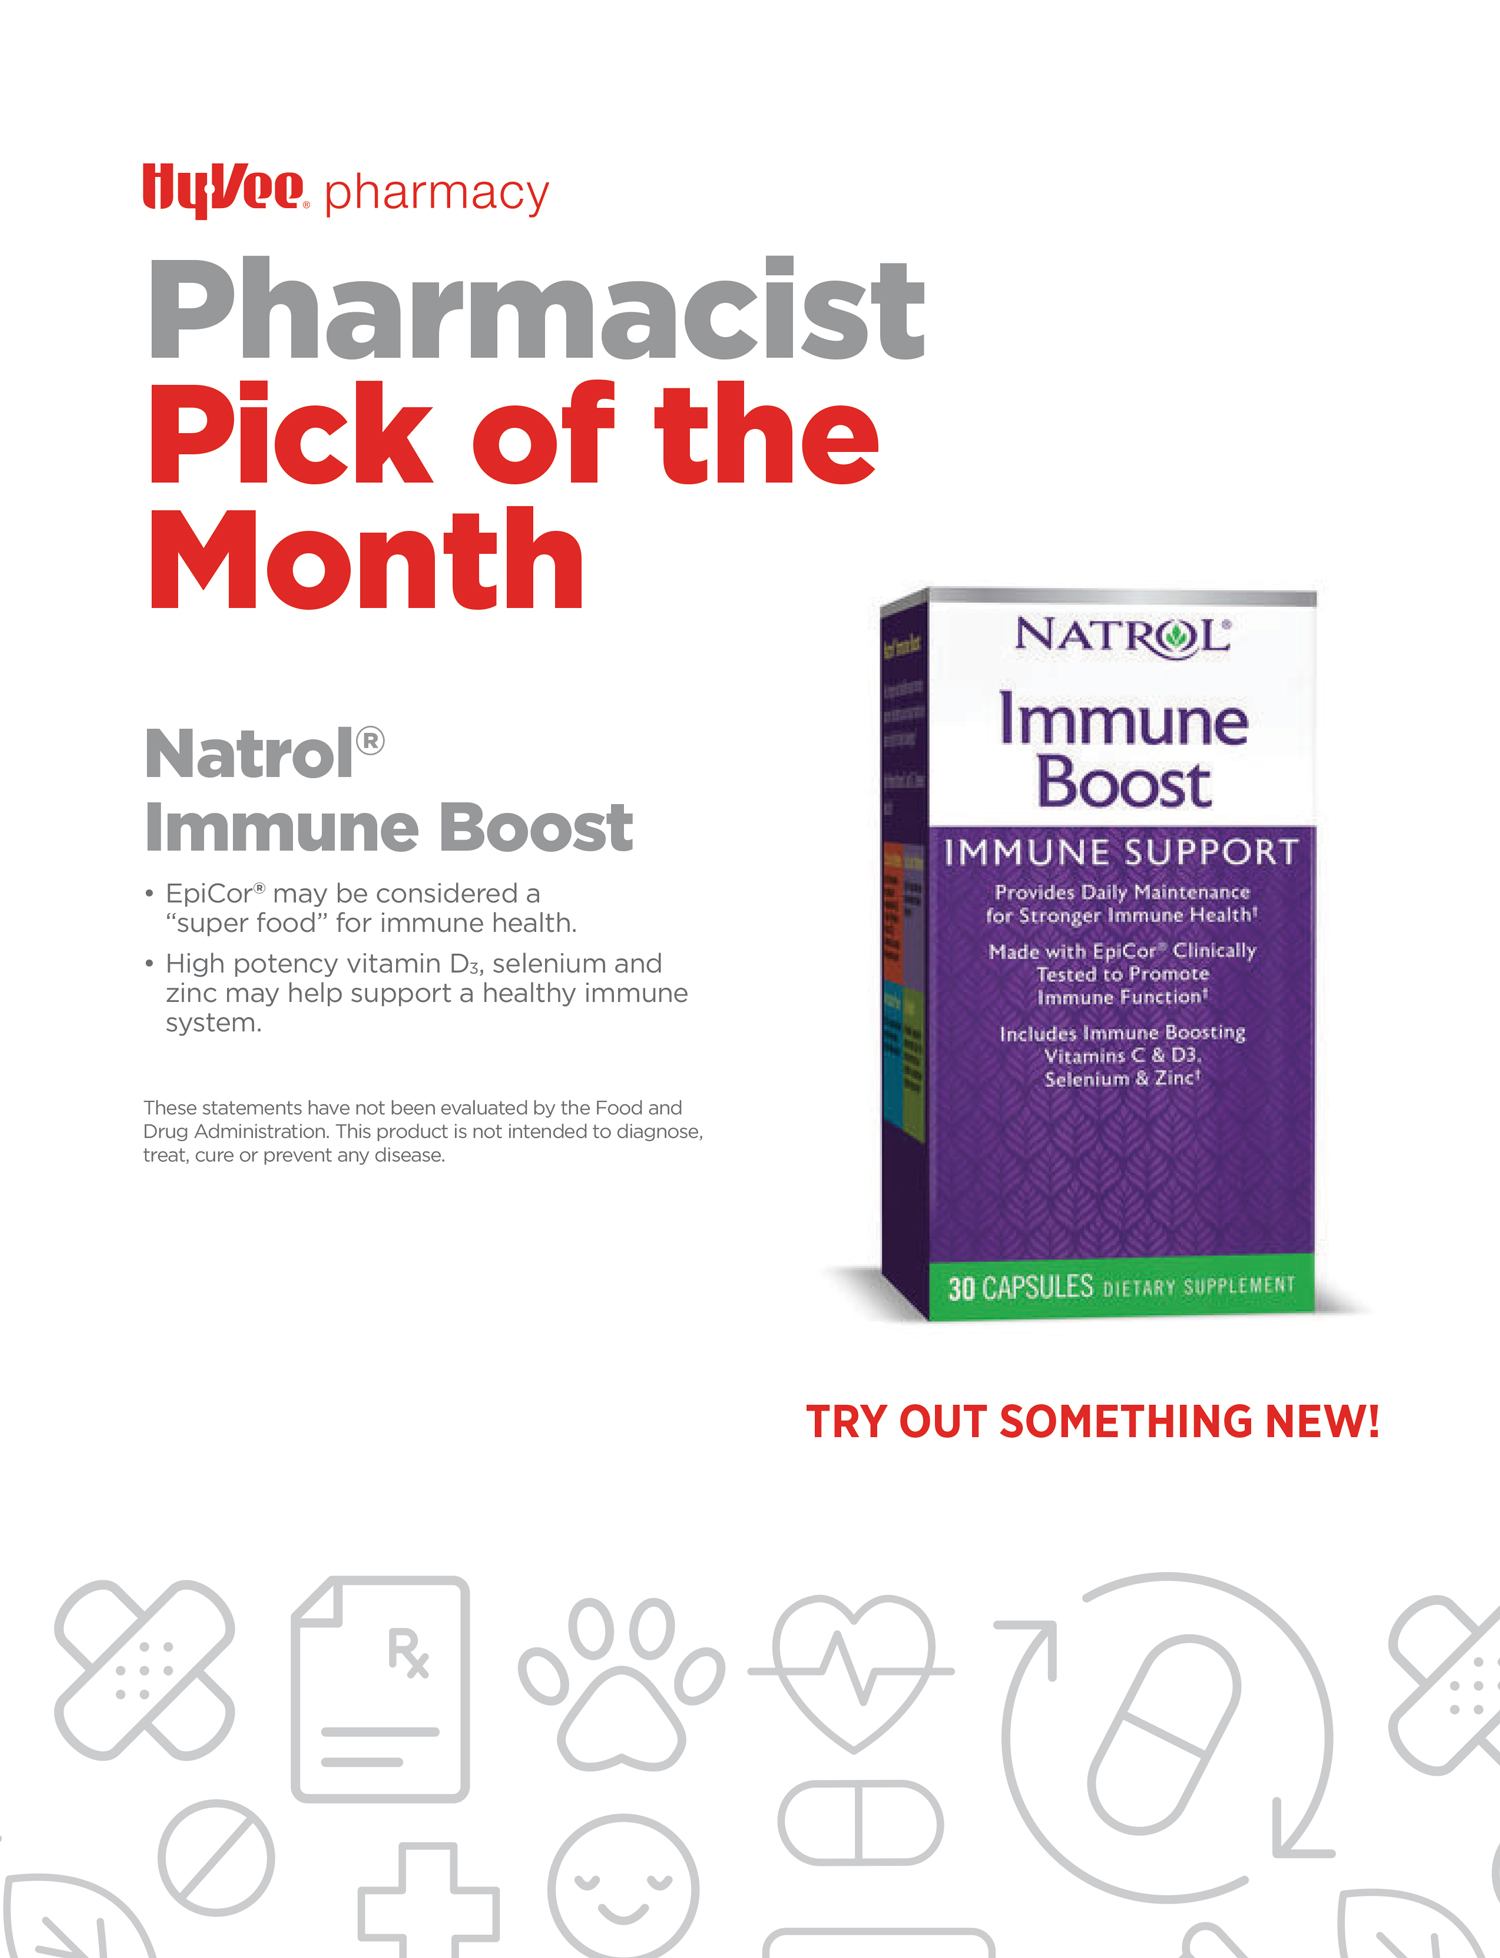 March POM - Natrol Immune Boost